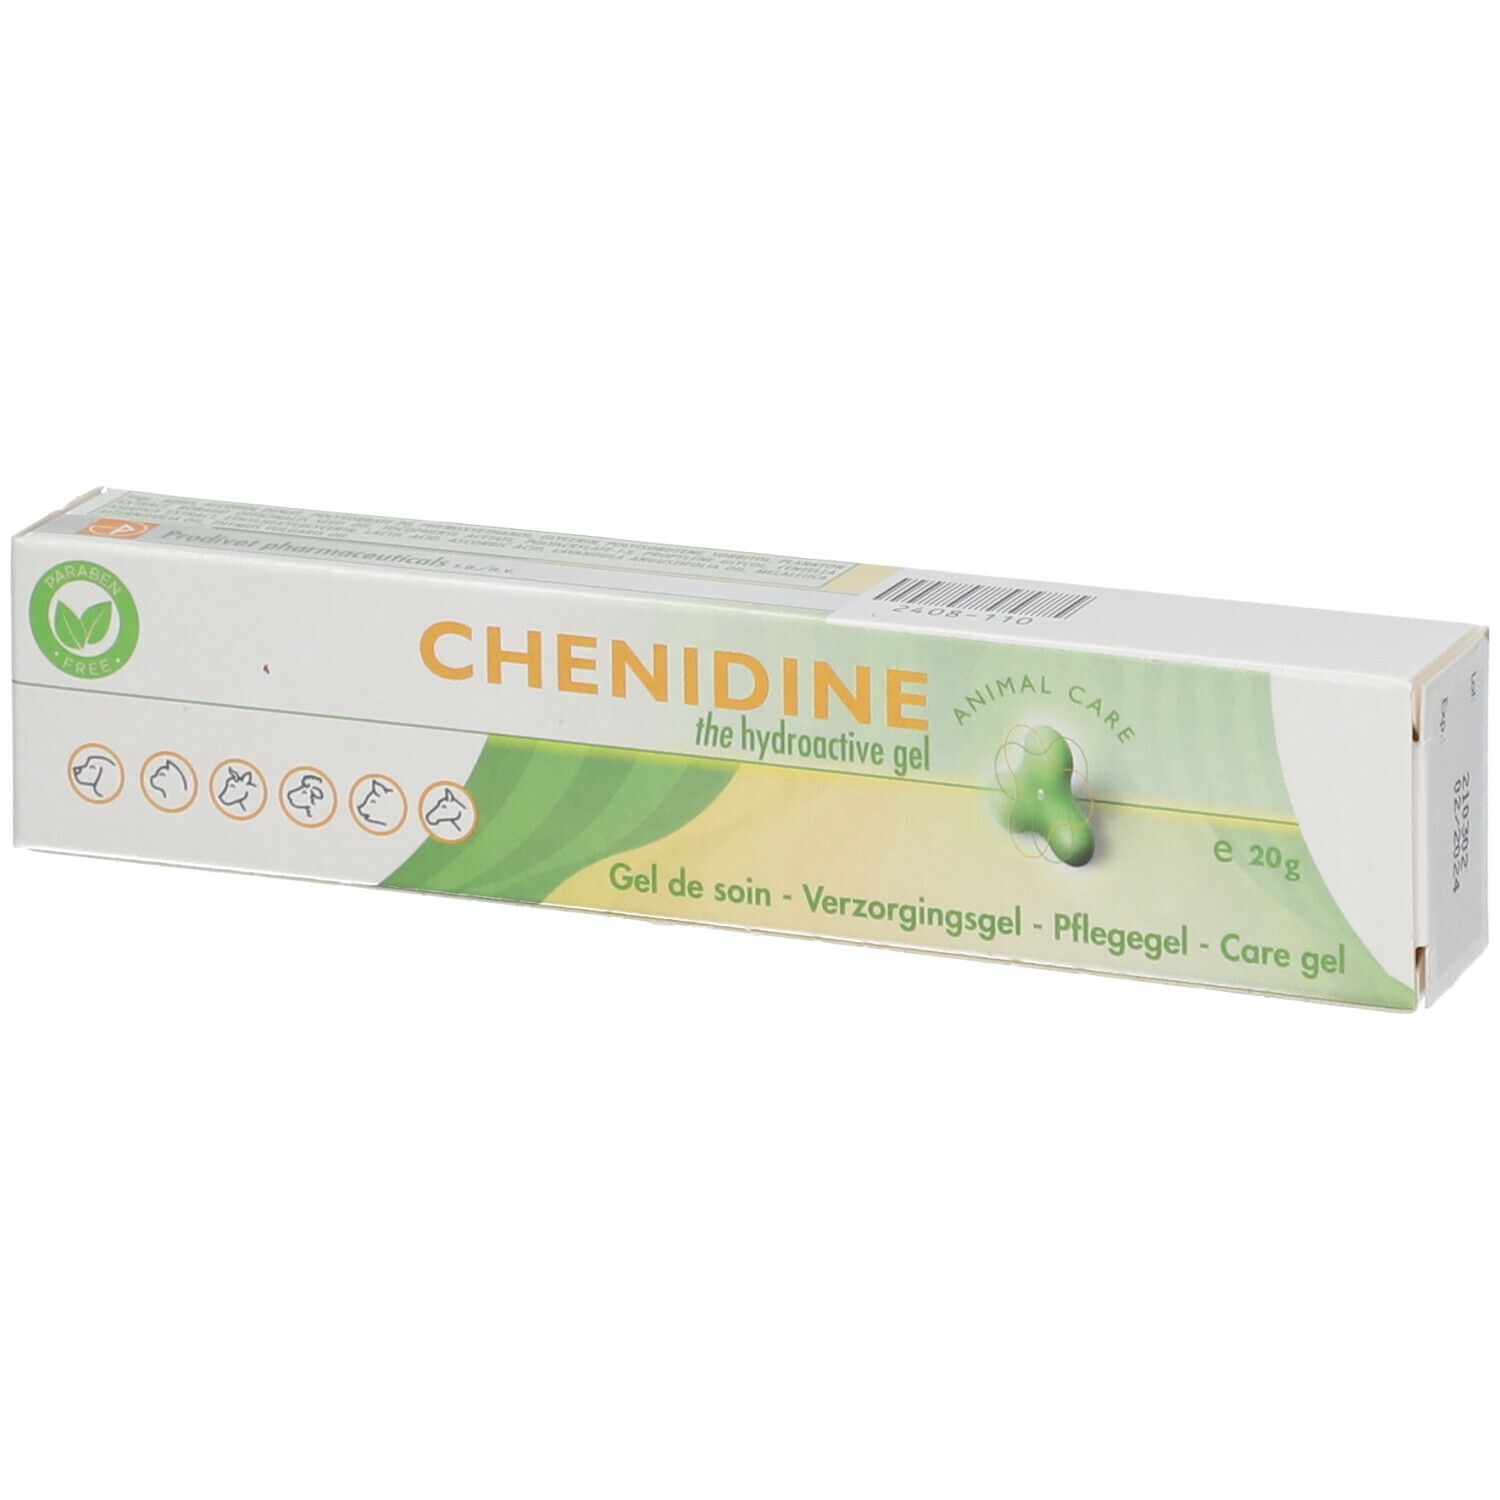 CHENIDINE® Gel de soin hydroactif